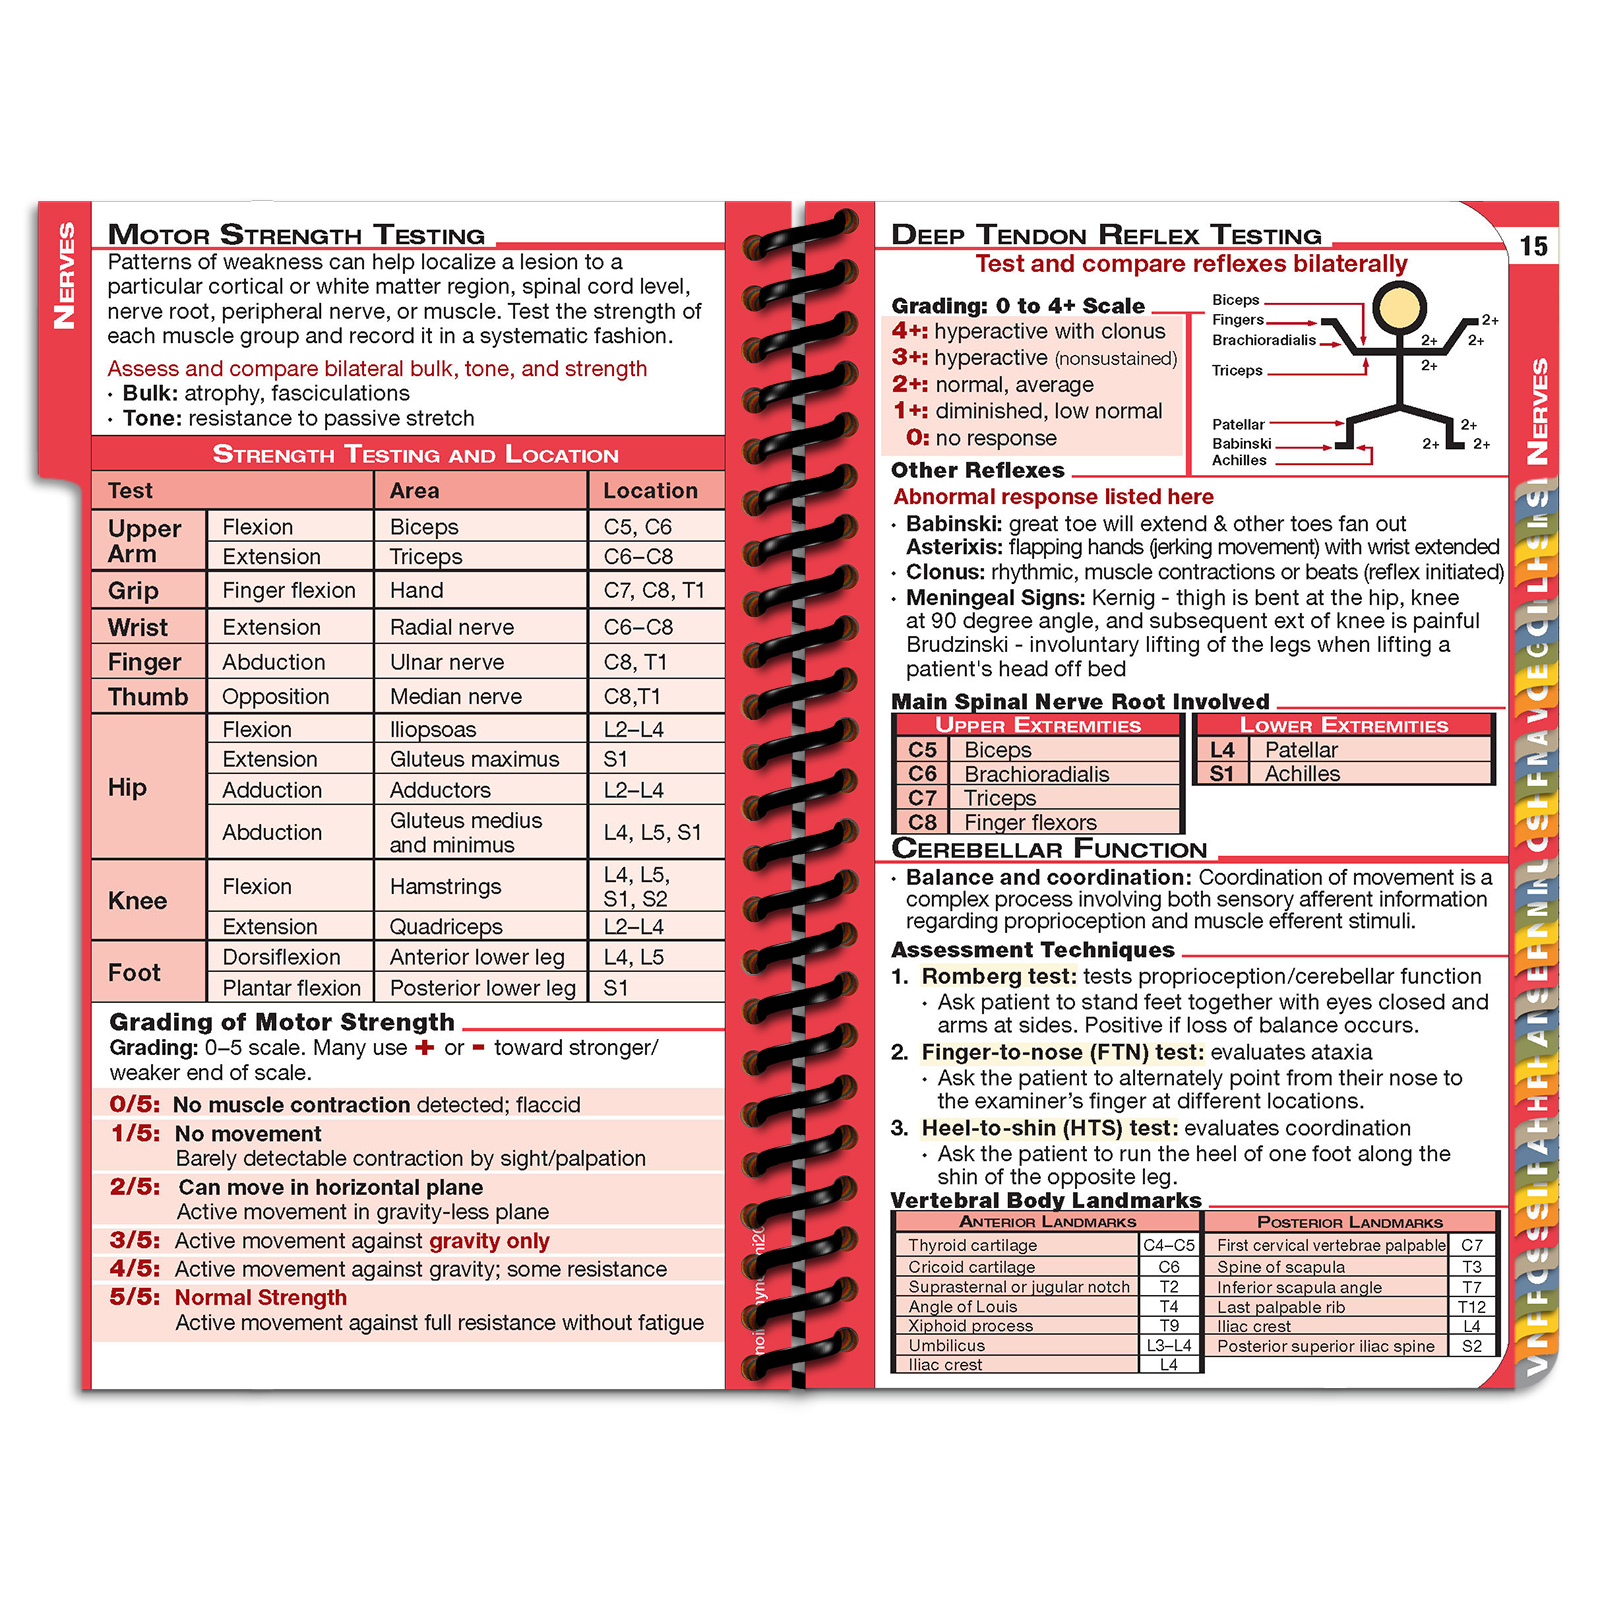 MDpocket Lenoir-Rhyne University PA Guide